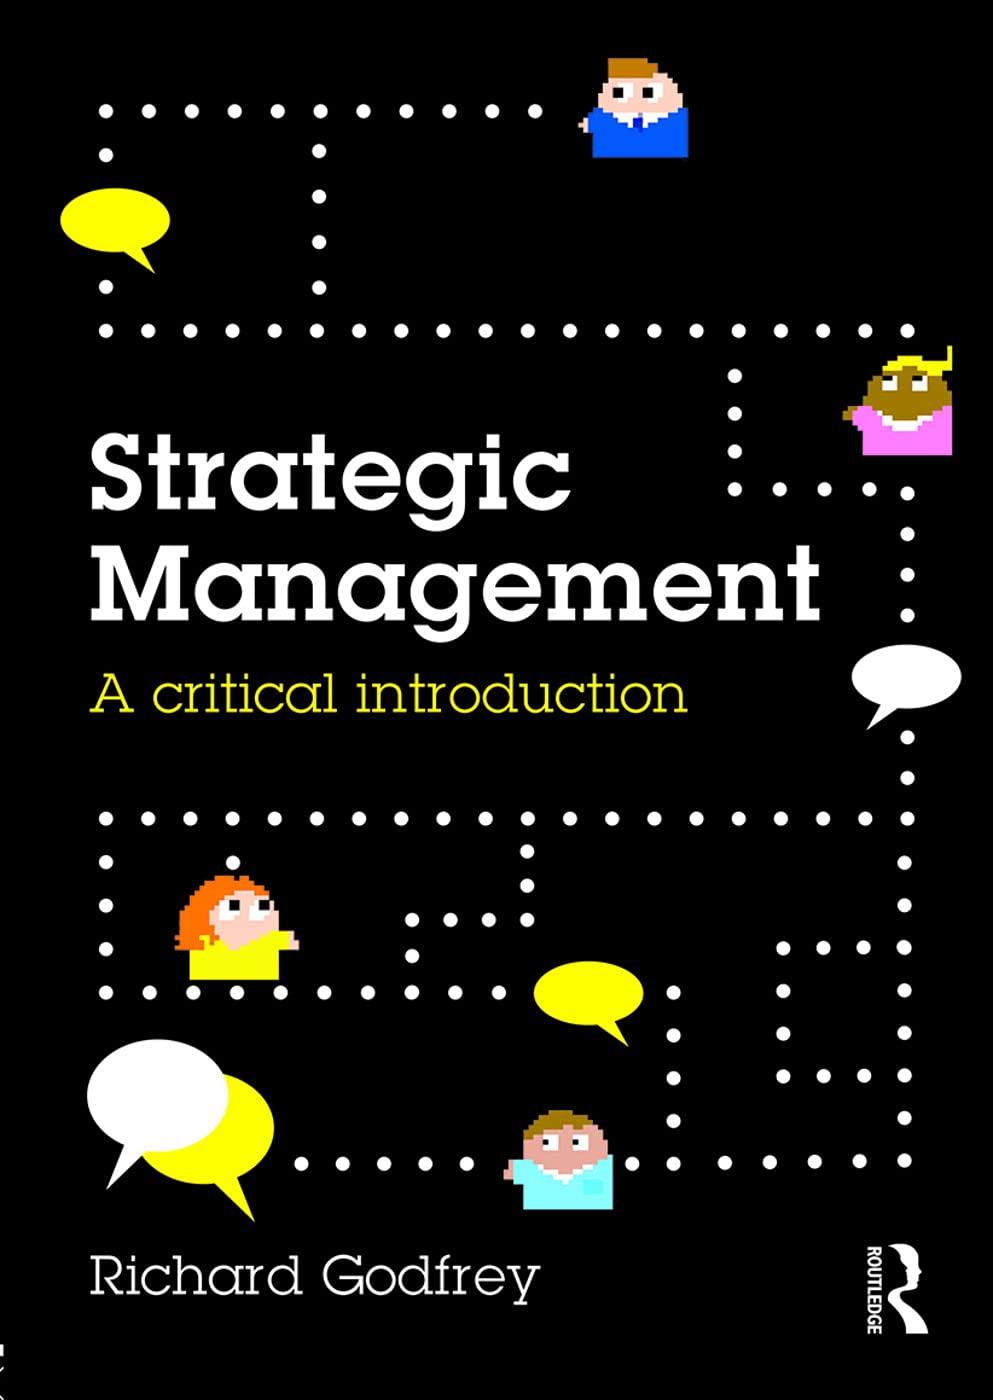 strategic management 1st edition richard godfrey 0415738768, 978-0415738767